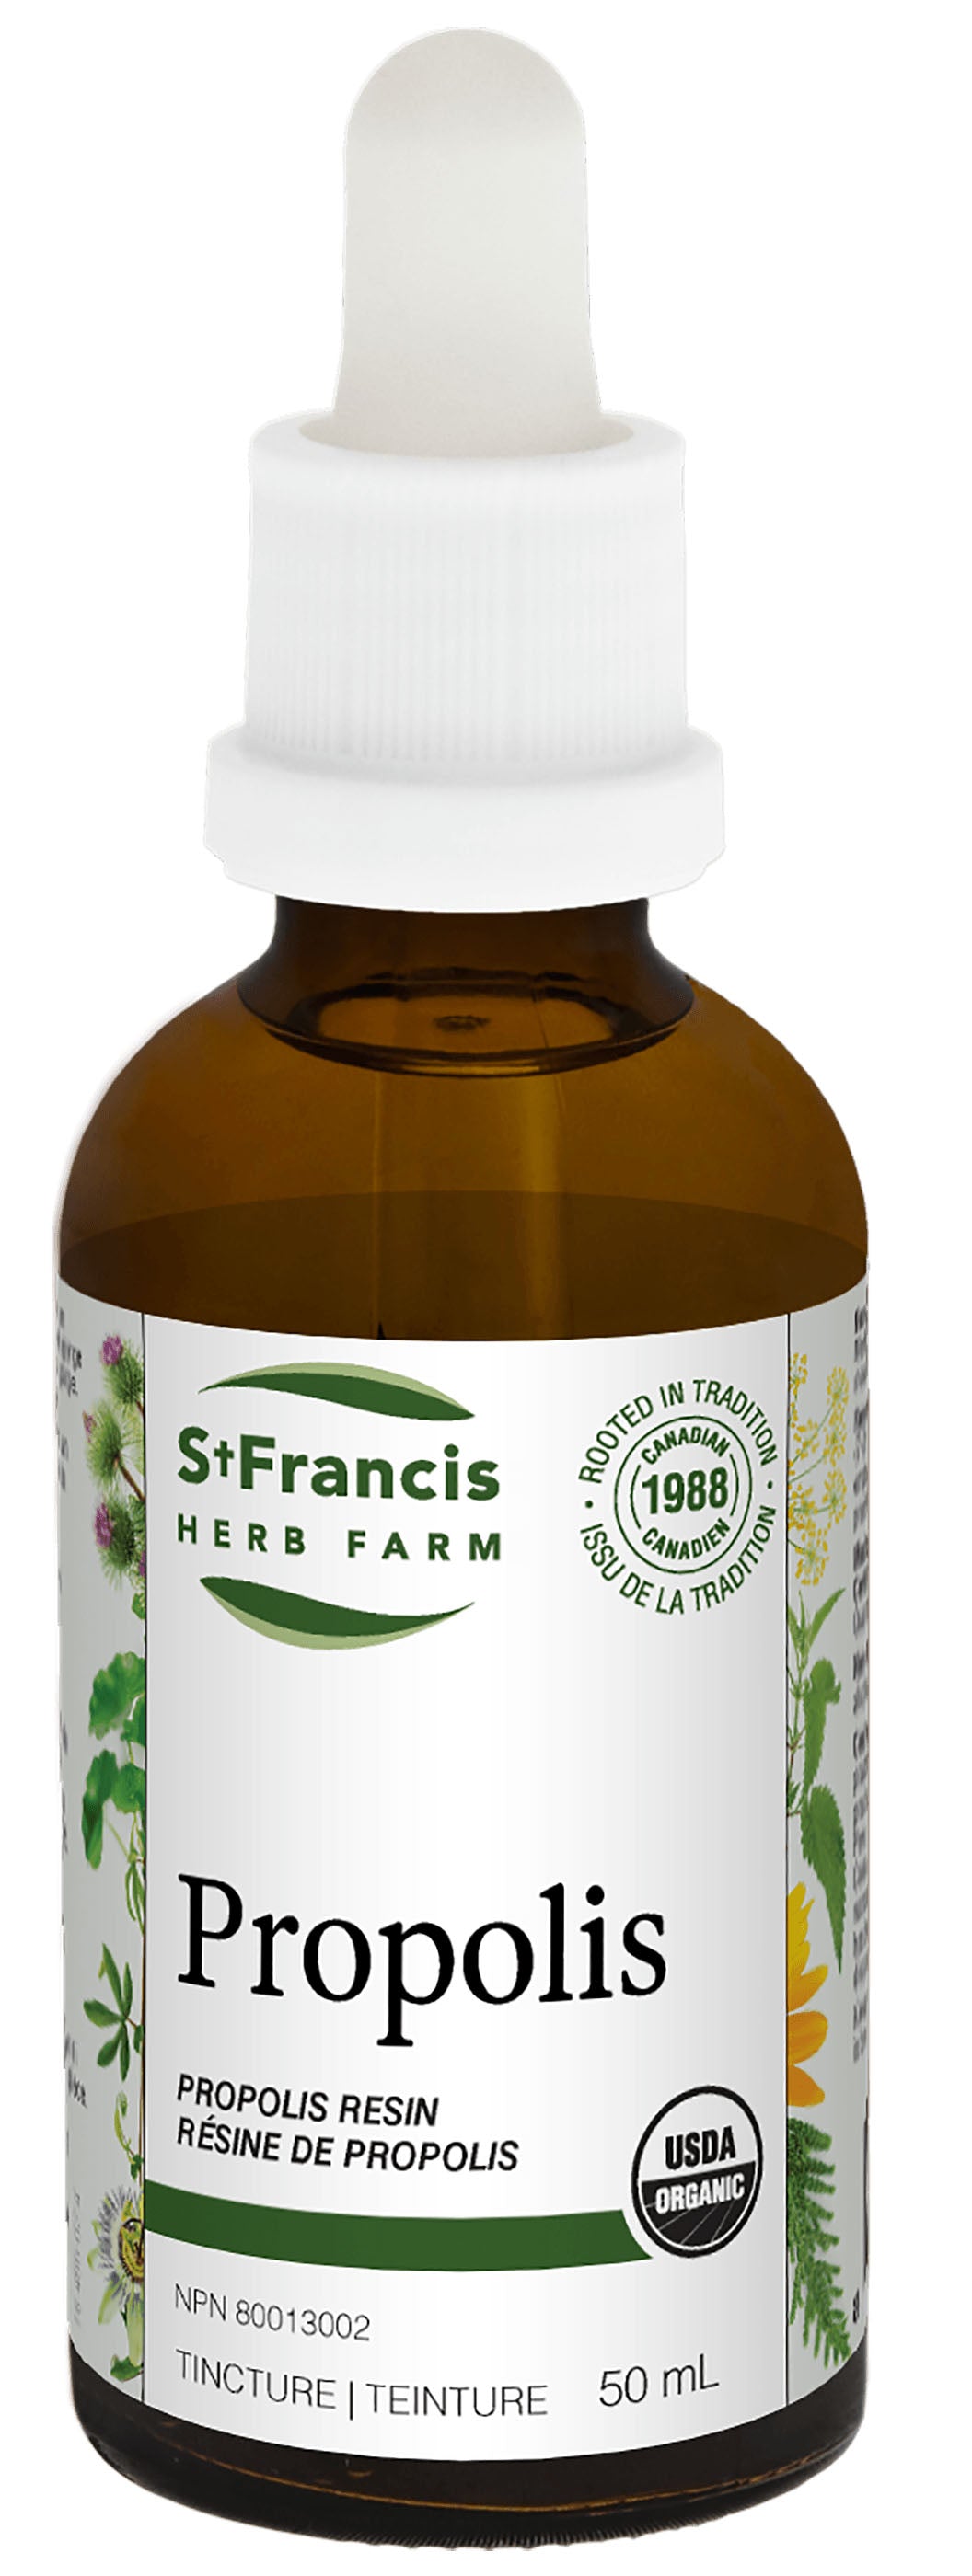 ST FRANCIS HERB FARM Propolis (50 ml)